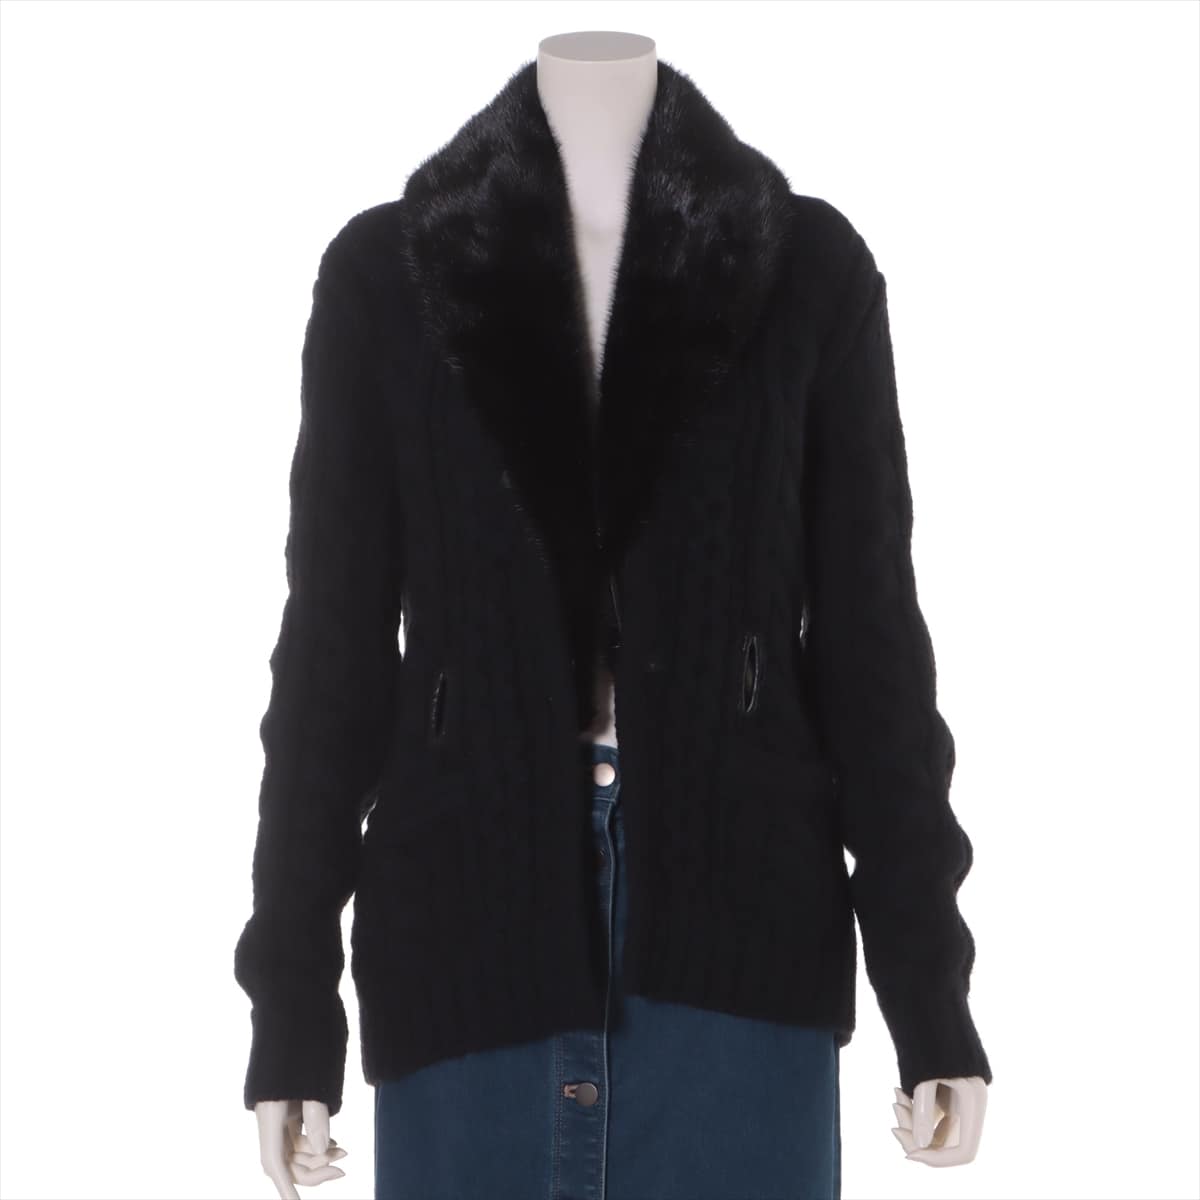 Hermès Cashmere Knit jacket 38 Ladies' Black